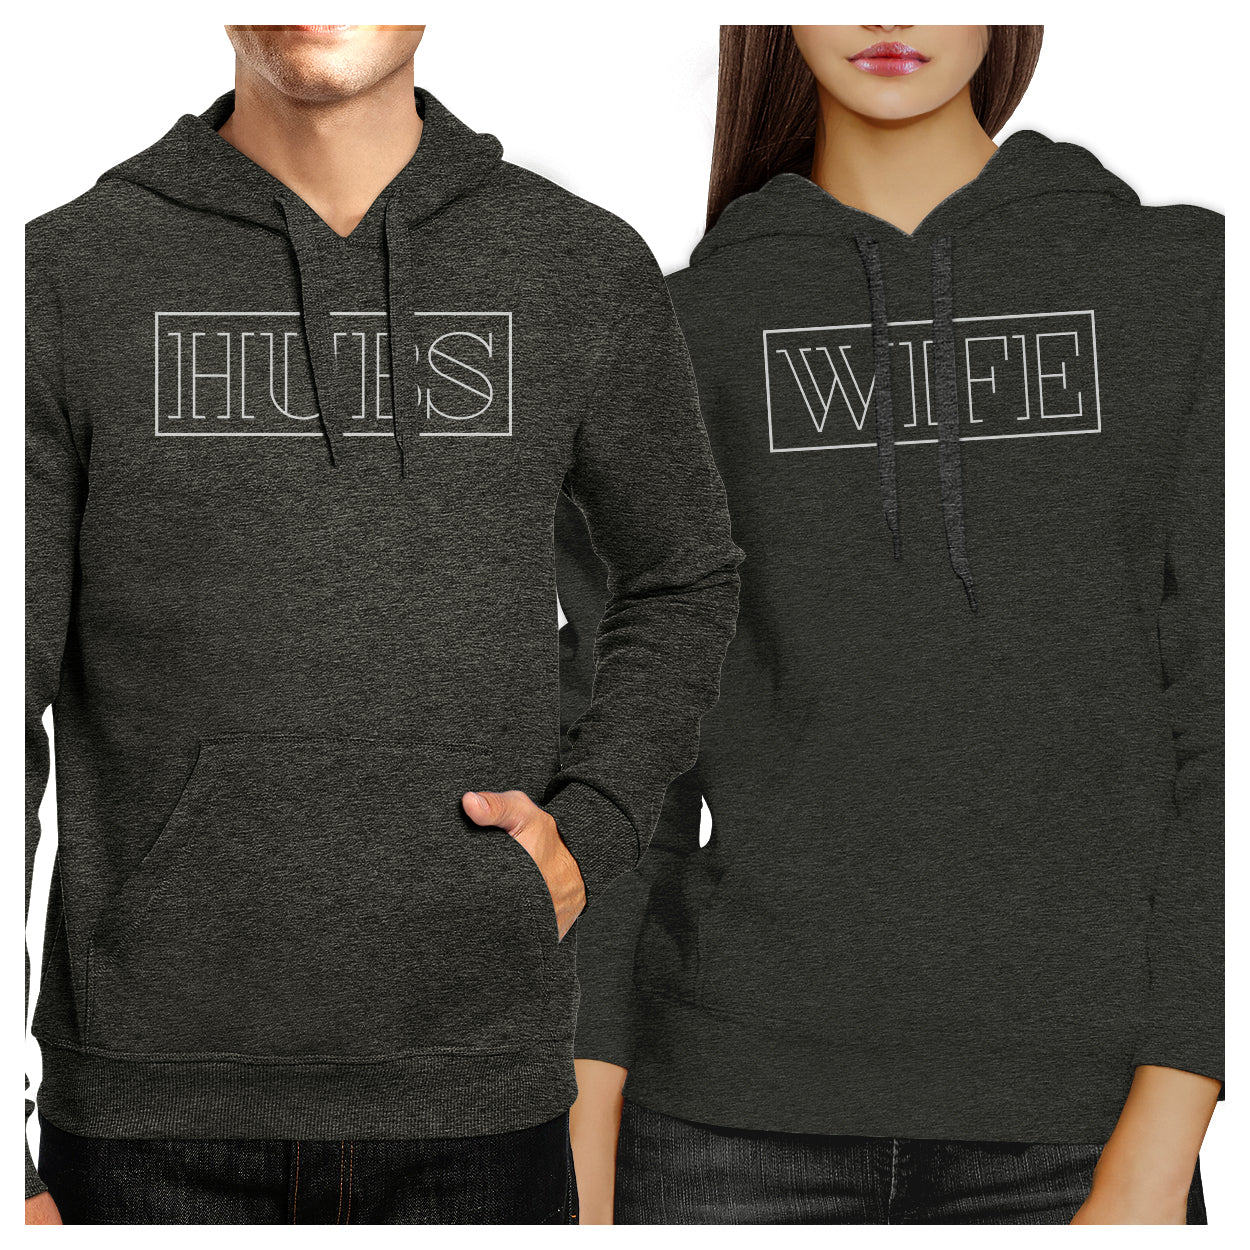 Hubs And Wife Matching Couple Dark Grey Hoodie